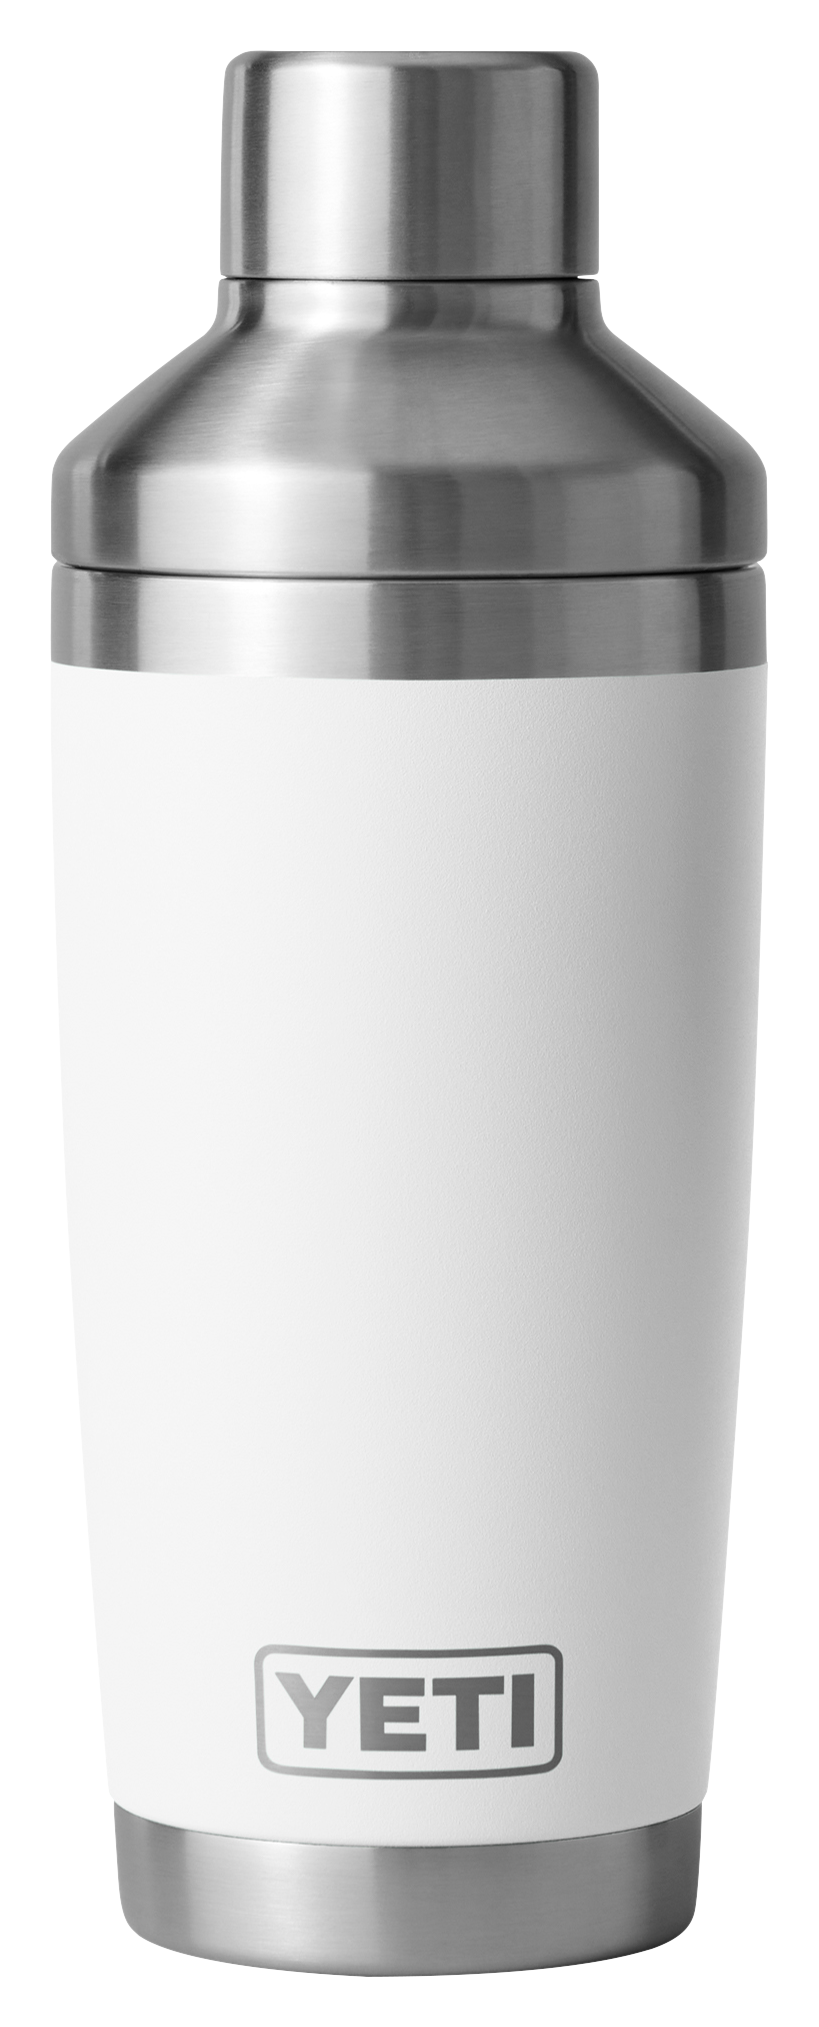 Yeti Rambler Cocktail Shaker Review: A Versatile Water Bottle